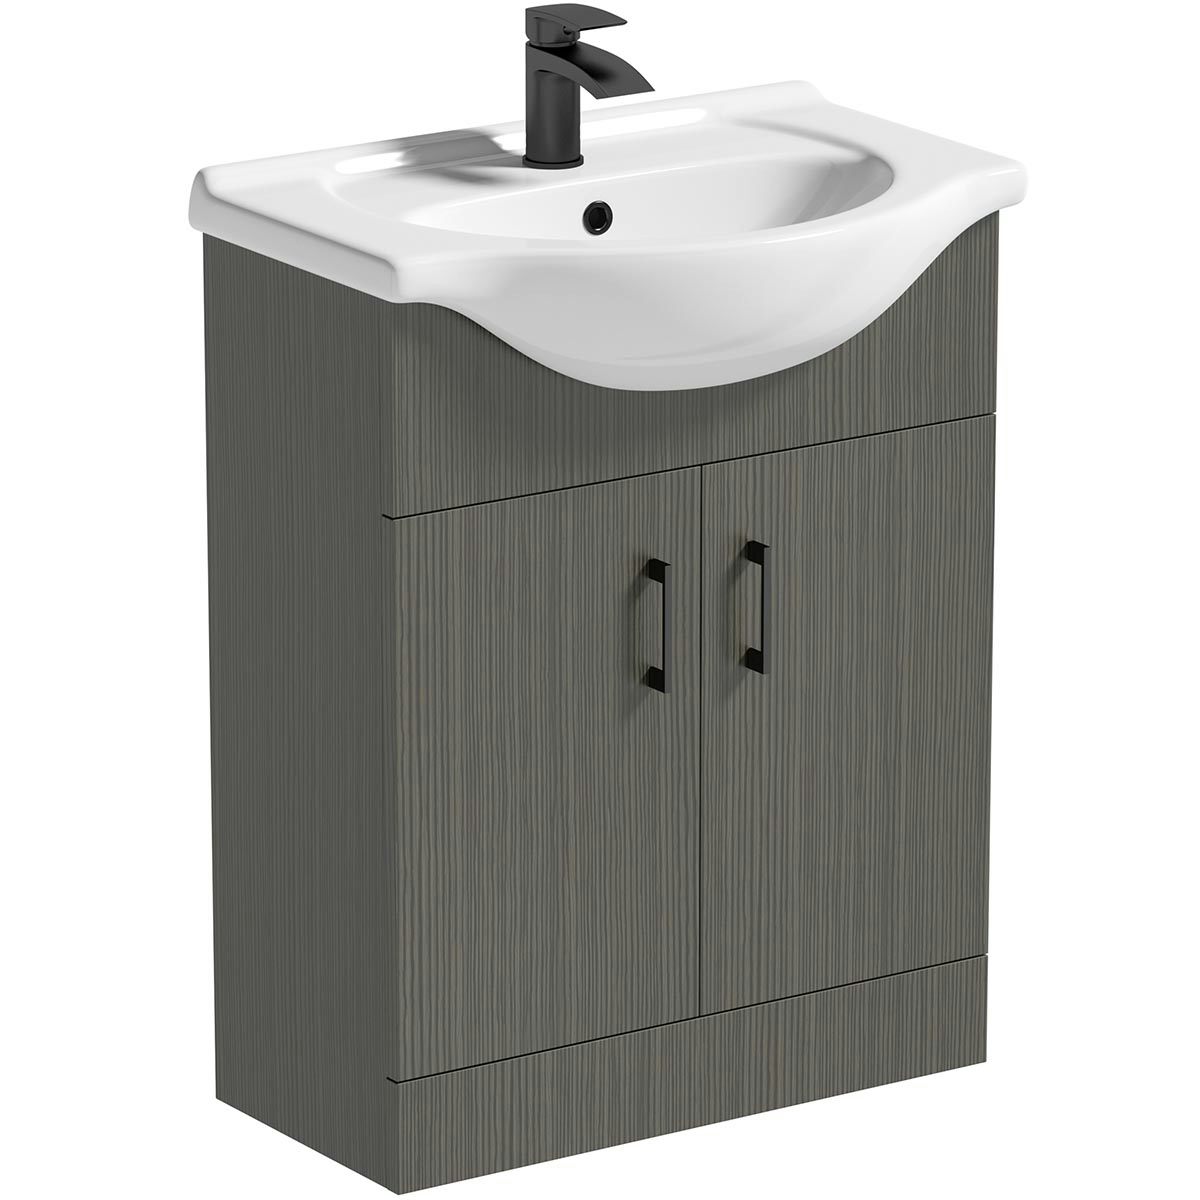 Orchard Lea avola grey floorstanding vanity unit with black handle and ceramic basin 650mm